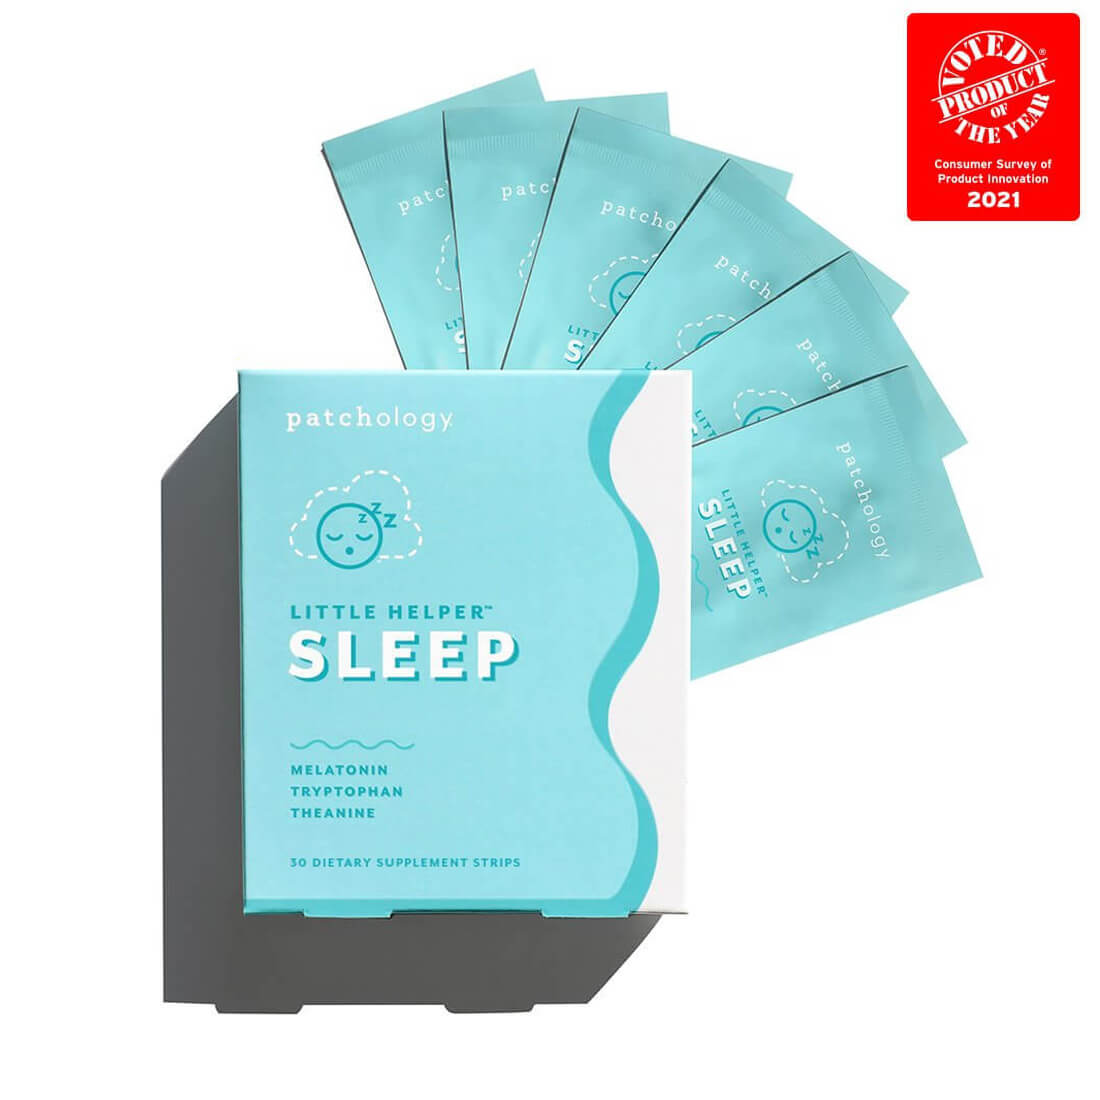 Little Helpers Sleep melatonin tryptophan theanine supplement strips award winning